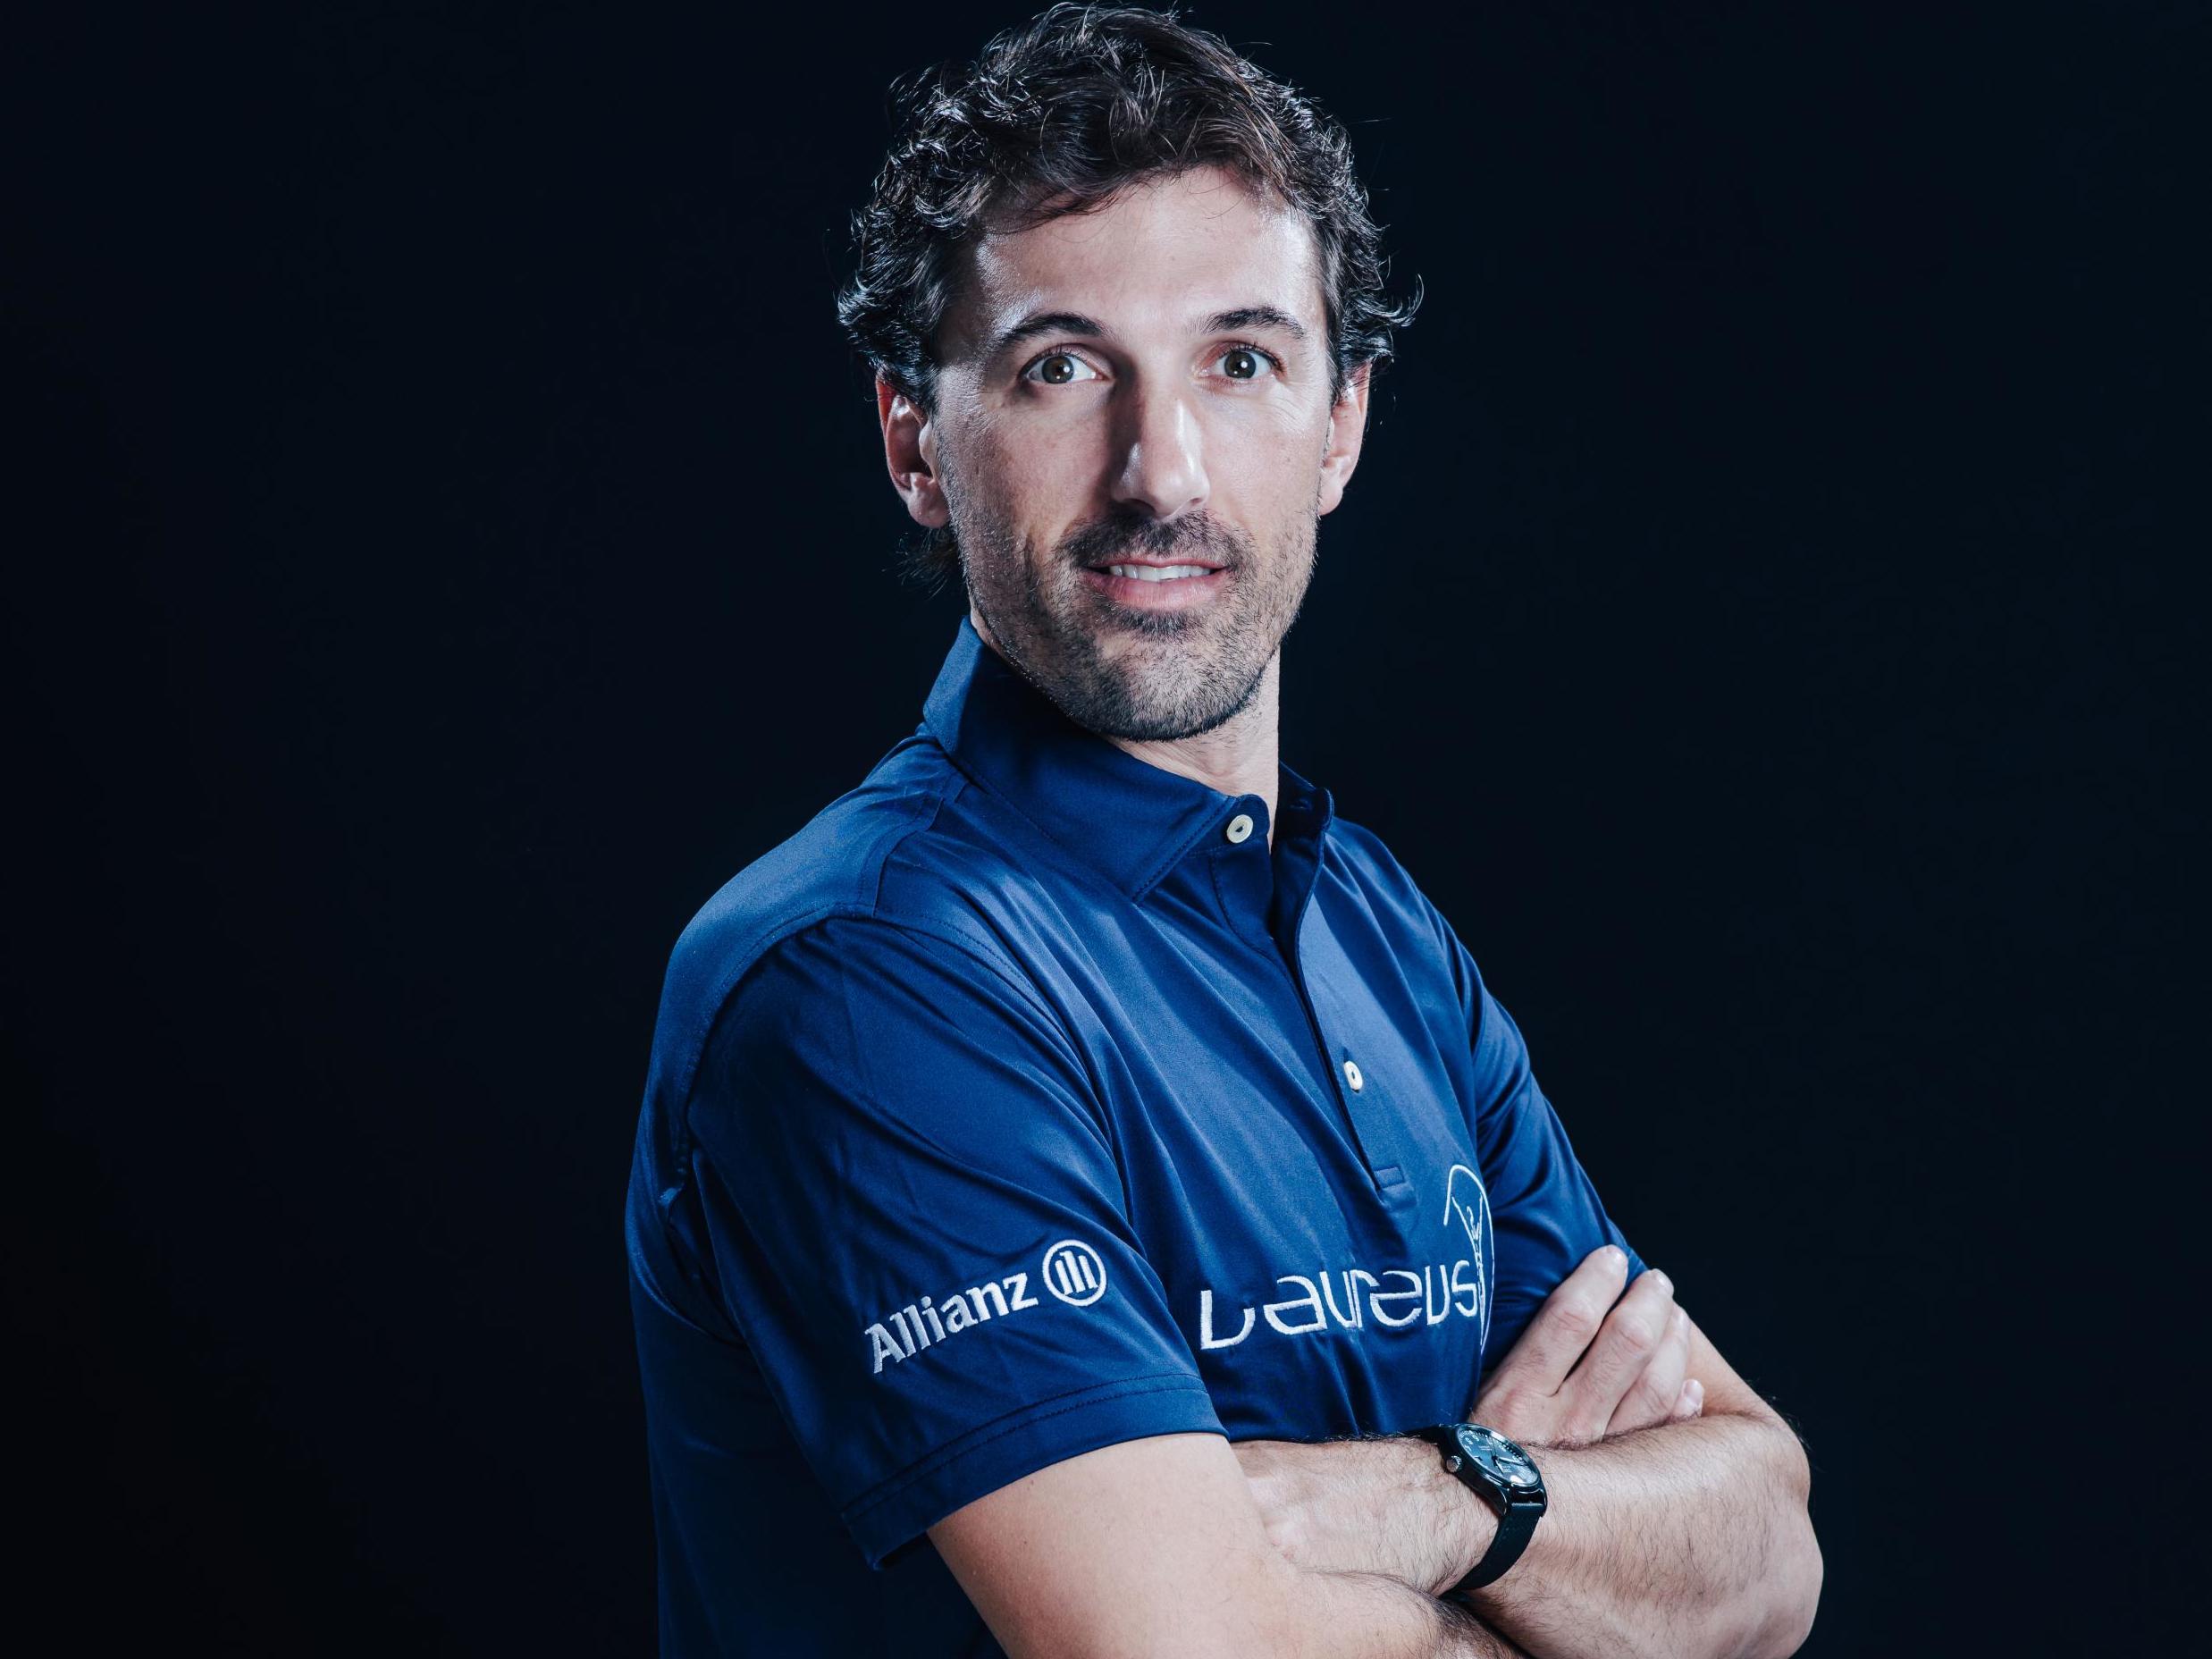 Fabian Cancellara: Without balance you don’t stay on, you fall